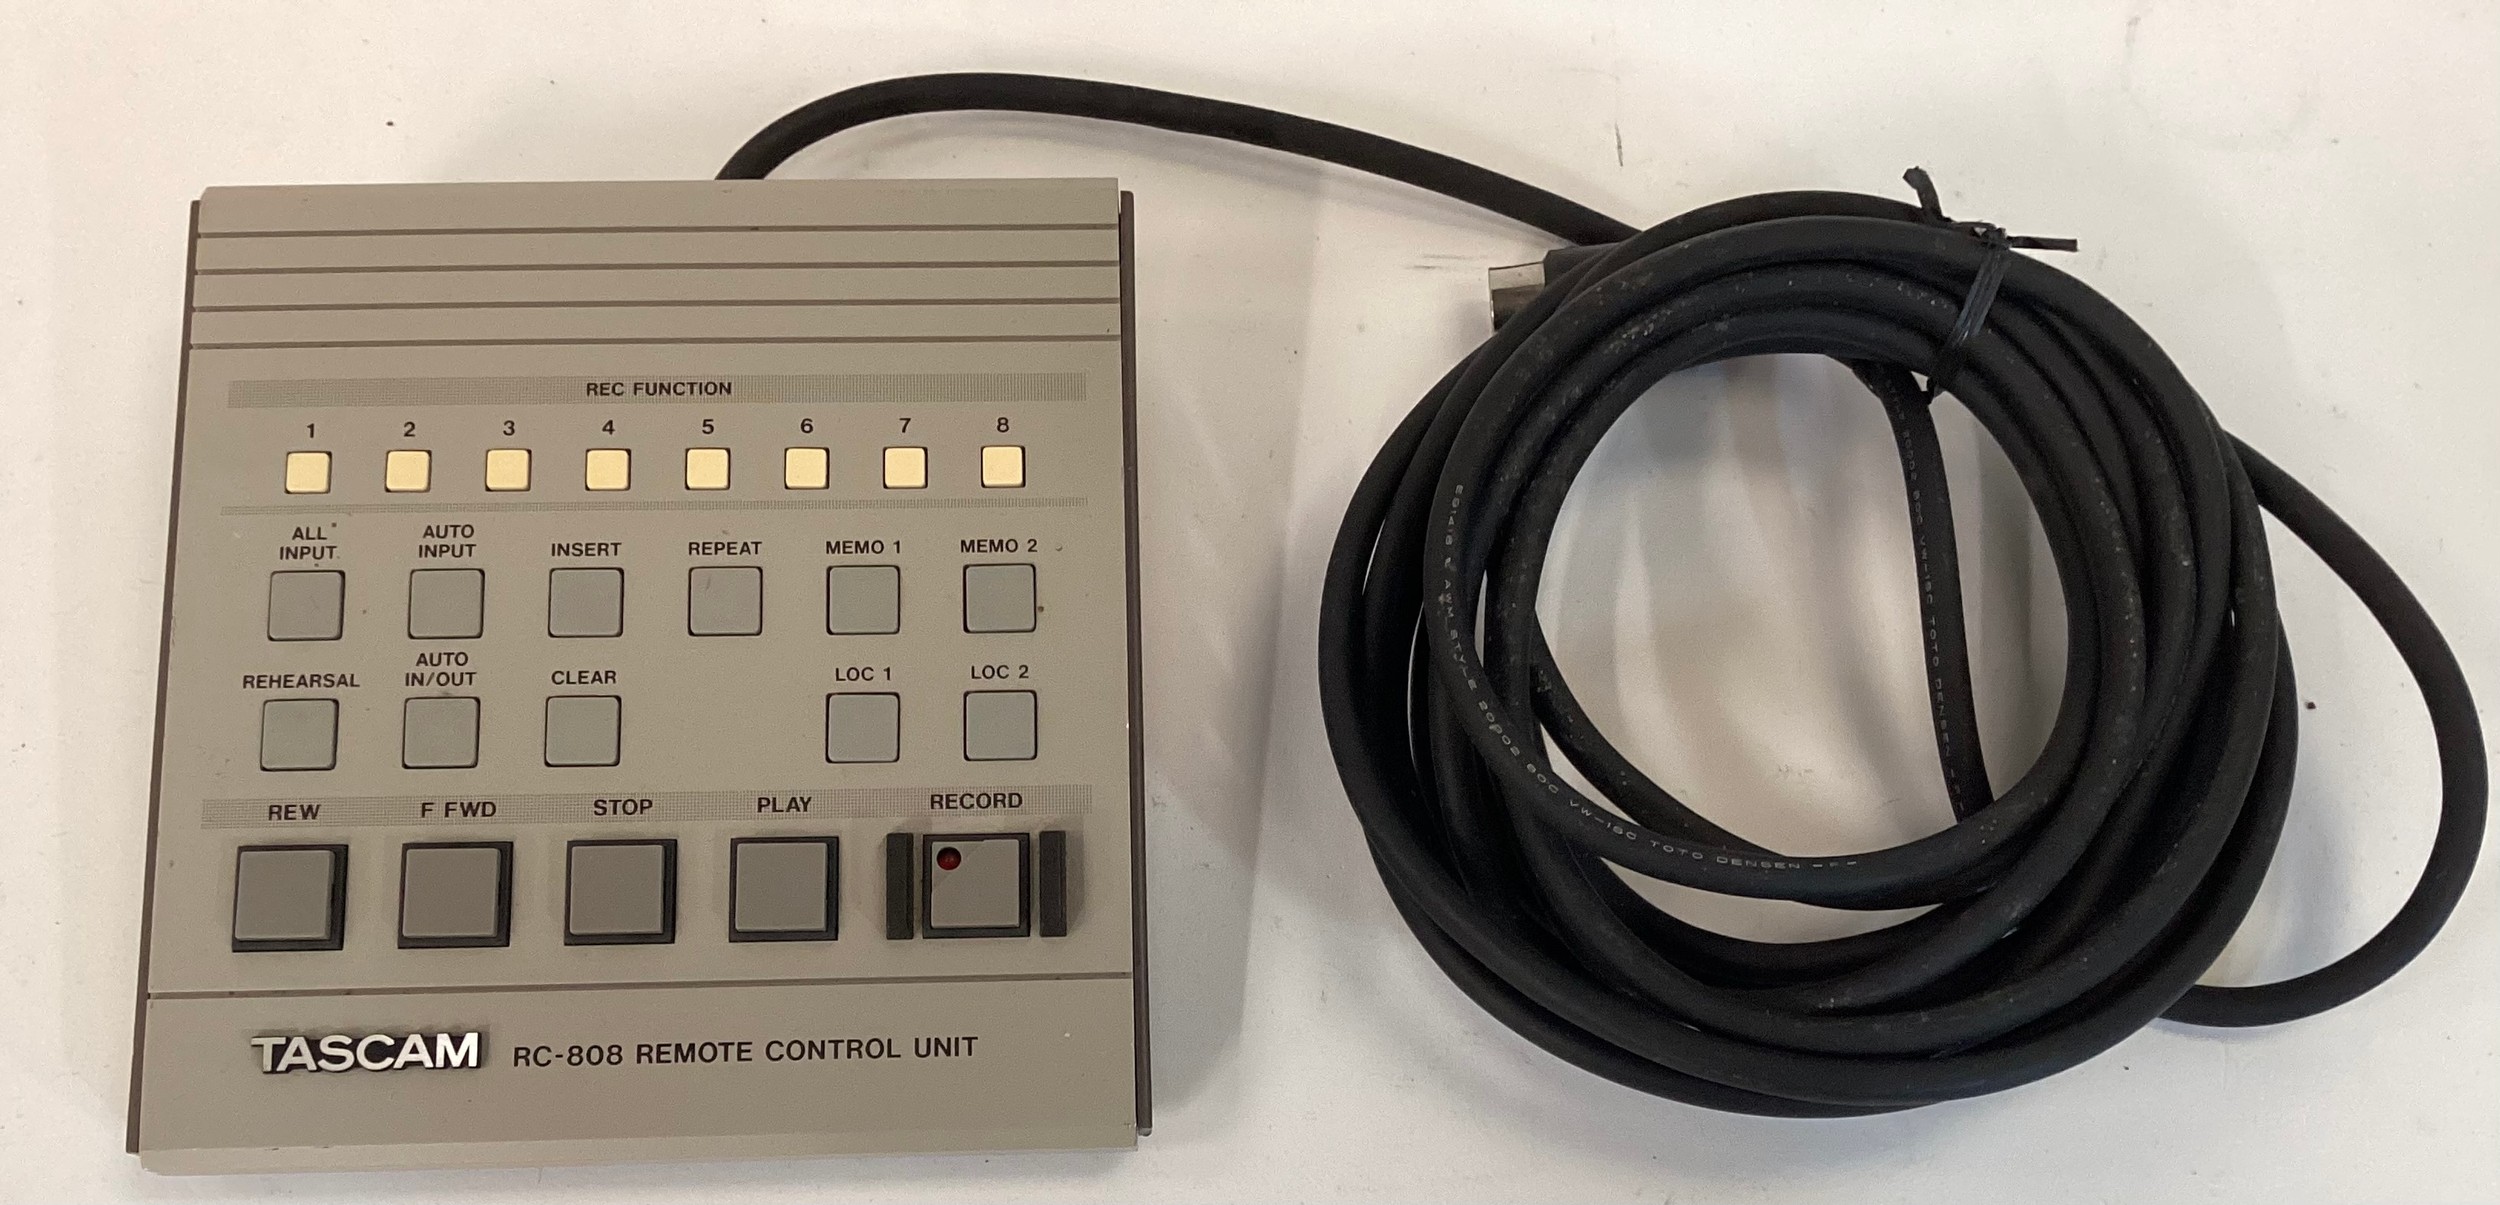 TASCAM RC-808 REMOTE CONTROL UNIT. Remote control for the legendary Tascam DA-88 digital tape